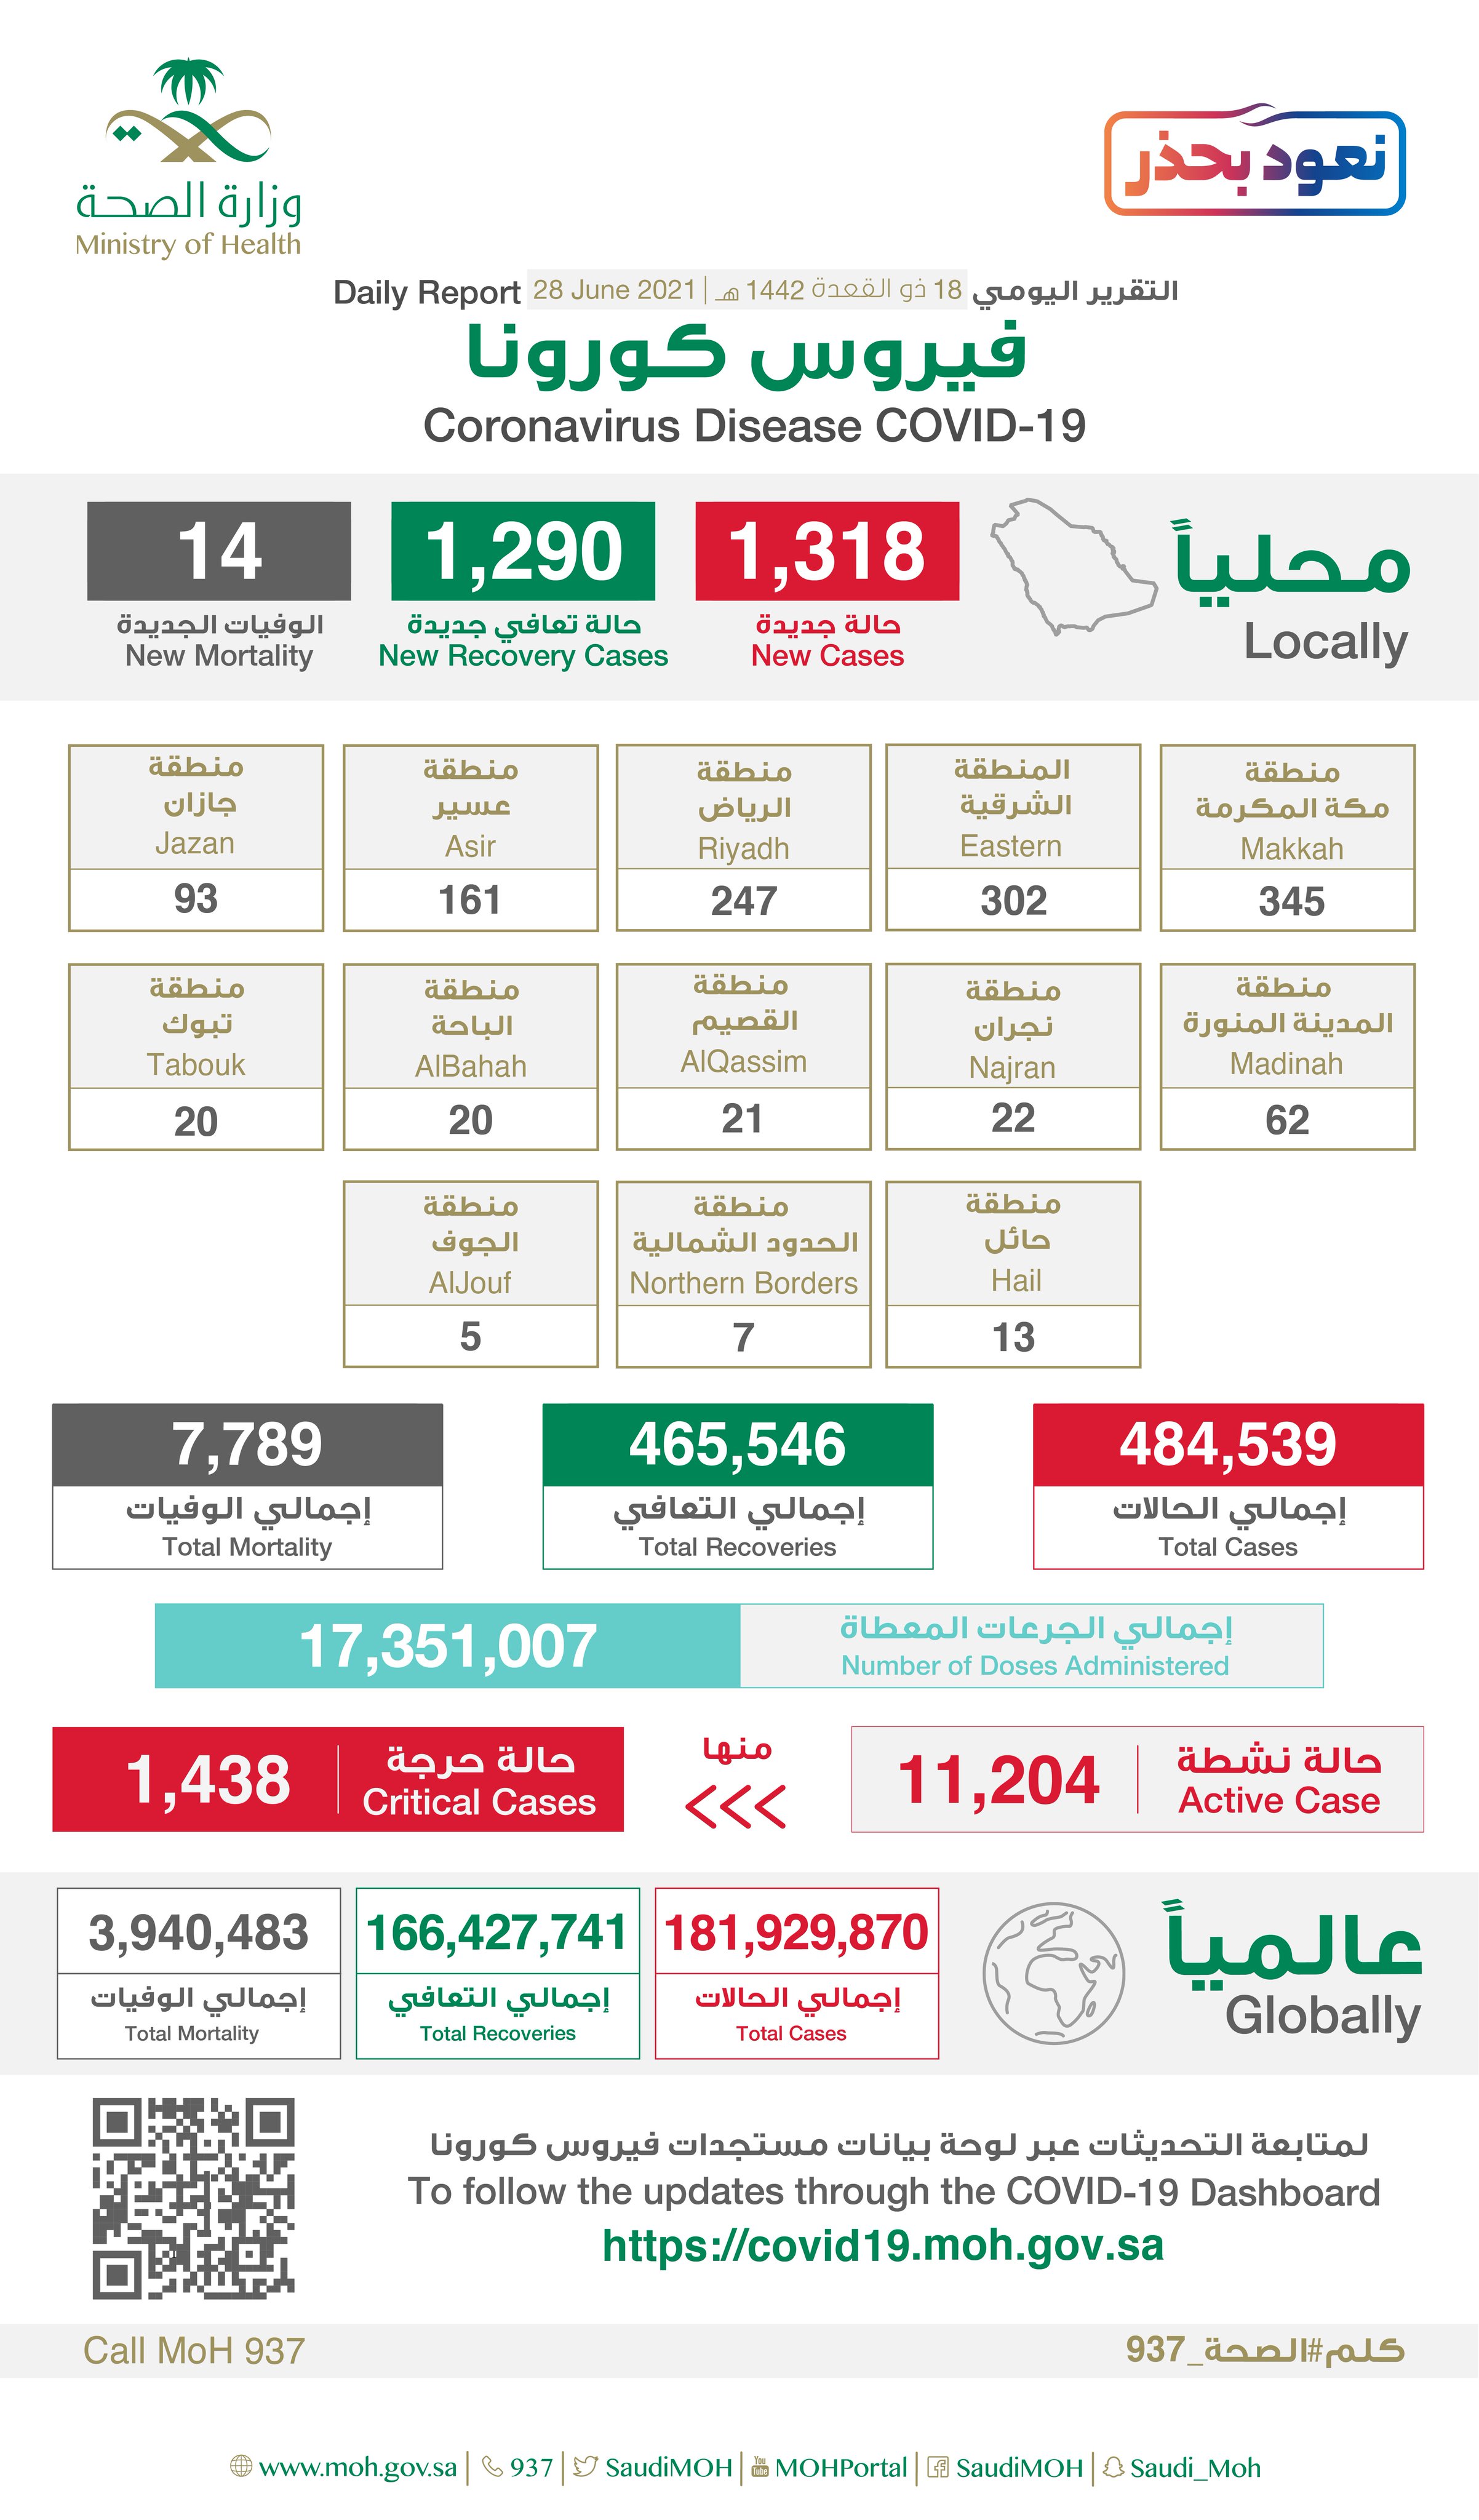 Saudi Arabia Coronavirus : Total Cases :484,539 , New Cases : 1,318 , Cured : 465,546 , Deaths: 7,789, Active Cases : 11,204